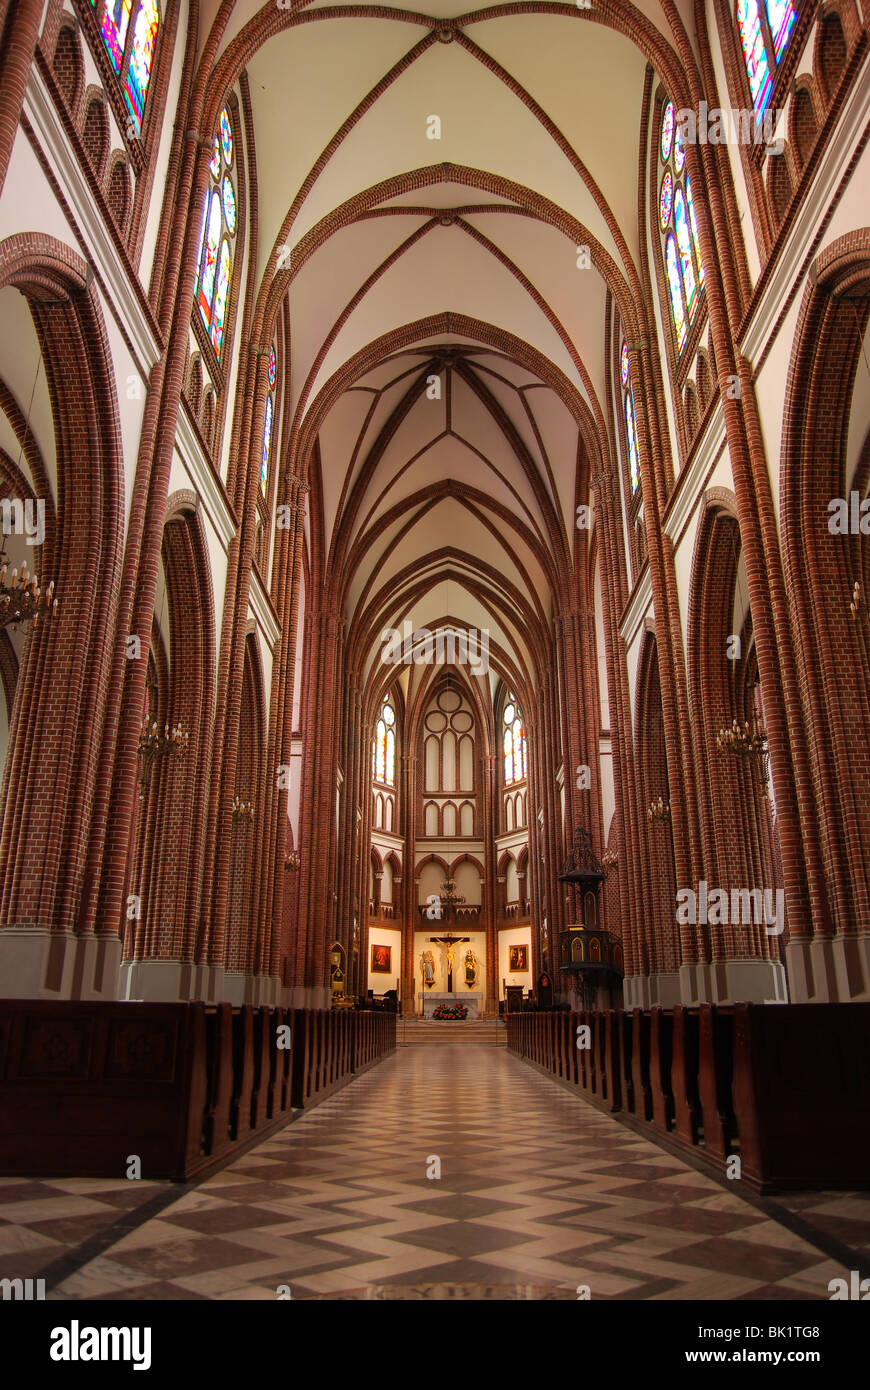 Polish catholic cathedral inside interior (vertical) Stock Photo